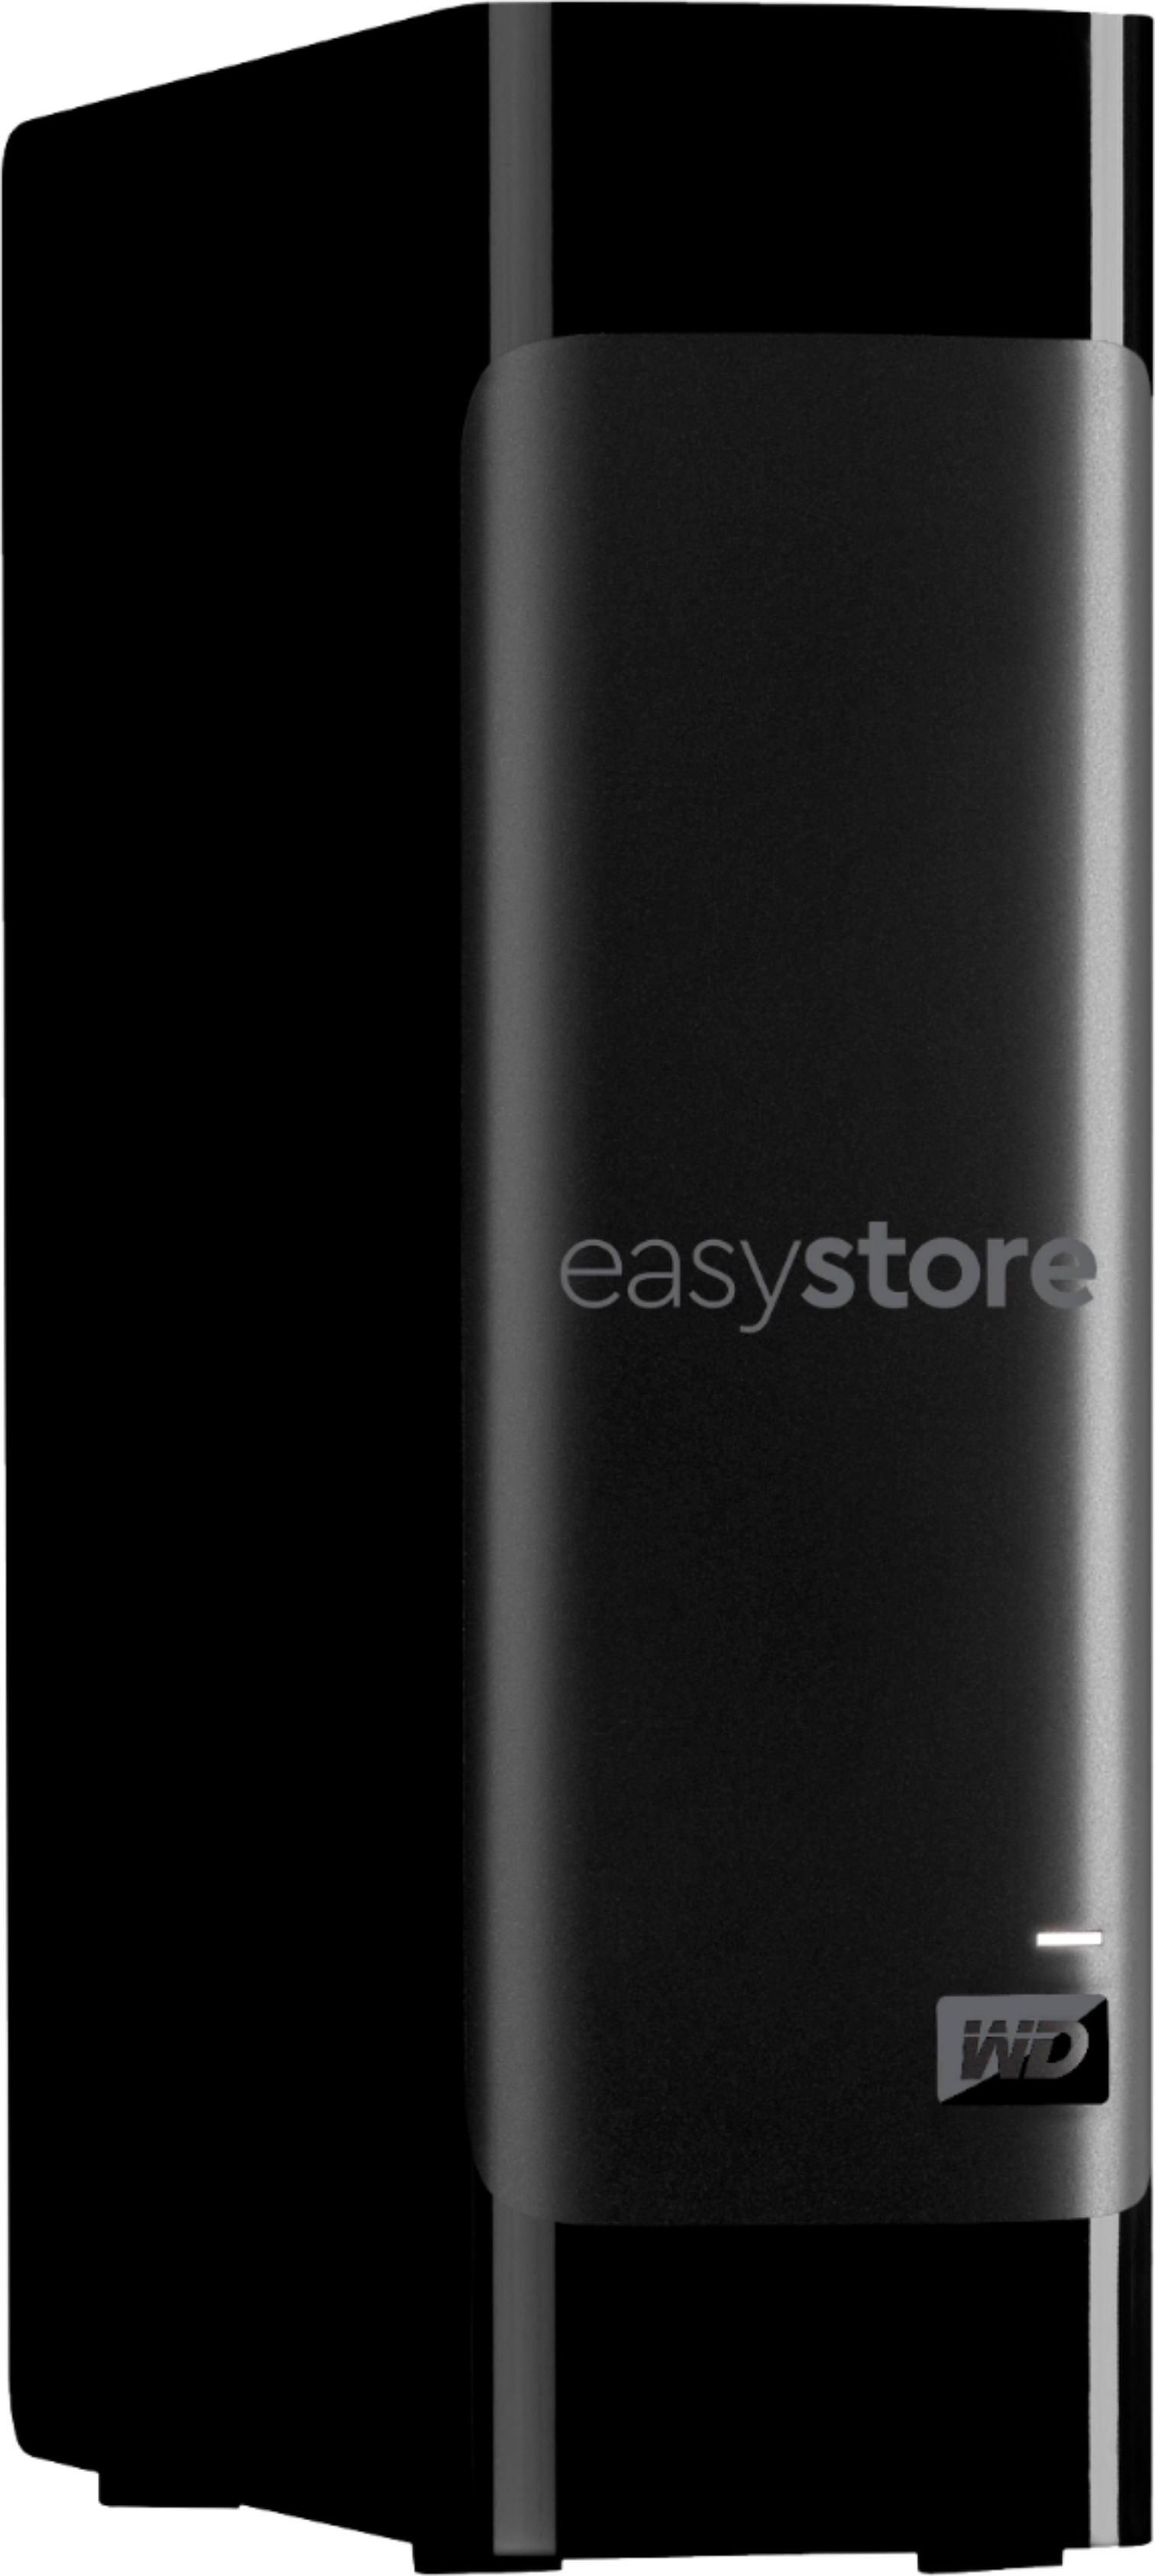 WD easystore 14TB External USB - Hard Black Drive WDBAMA0140HBK-NESN Buy Best 3.0